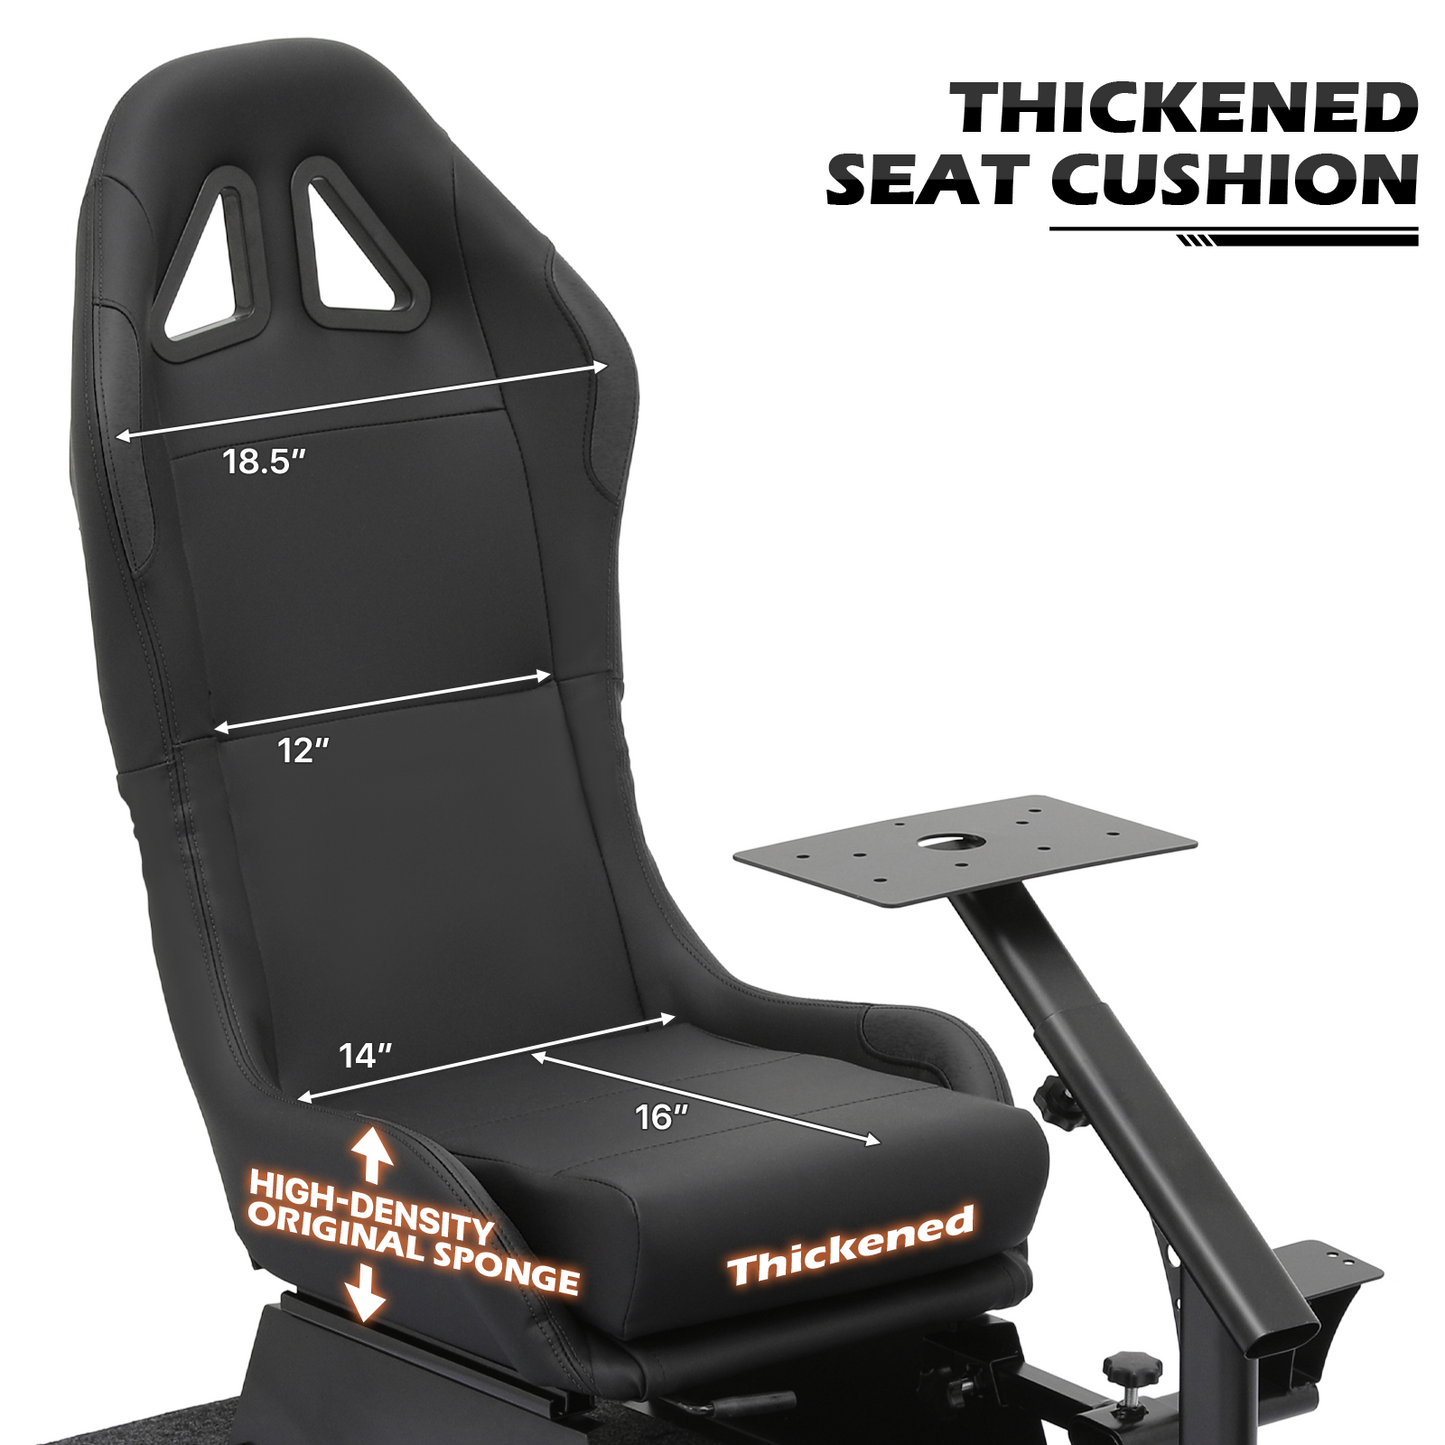 Racing Simulator Cockpi - Adjustable Gaming Seat - Black